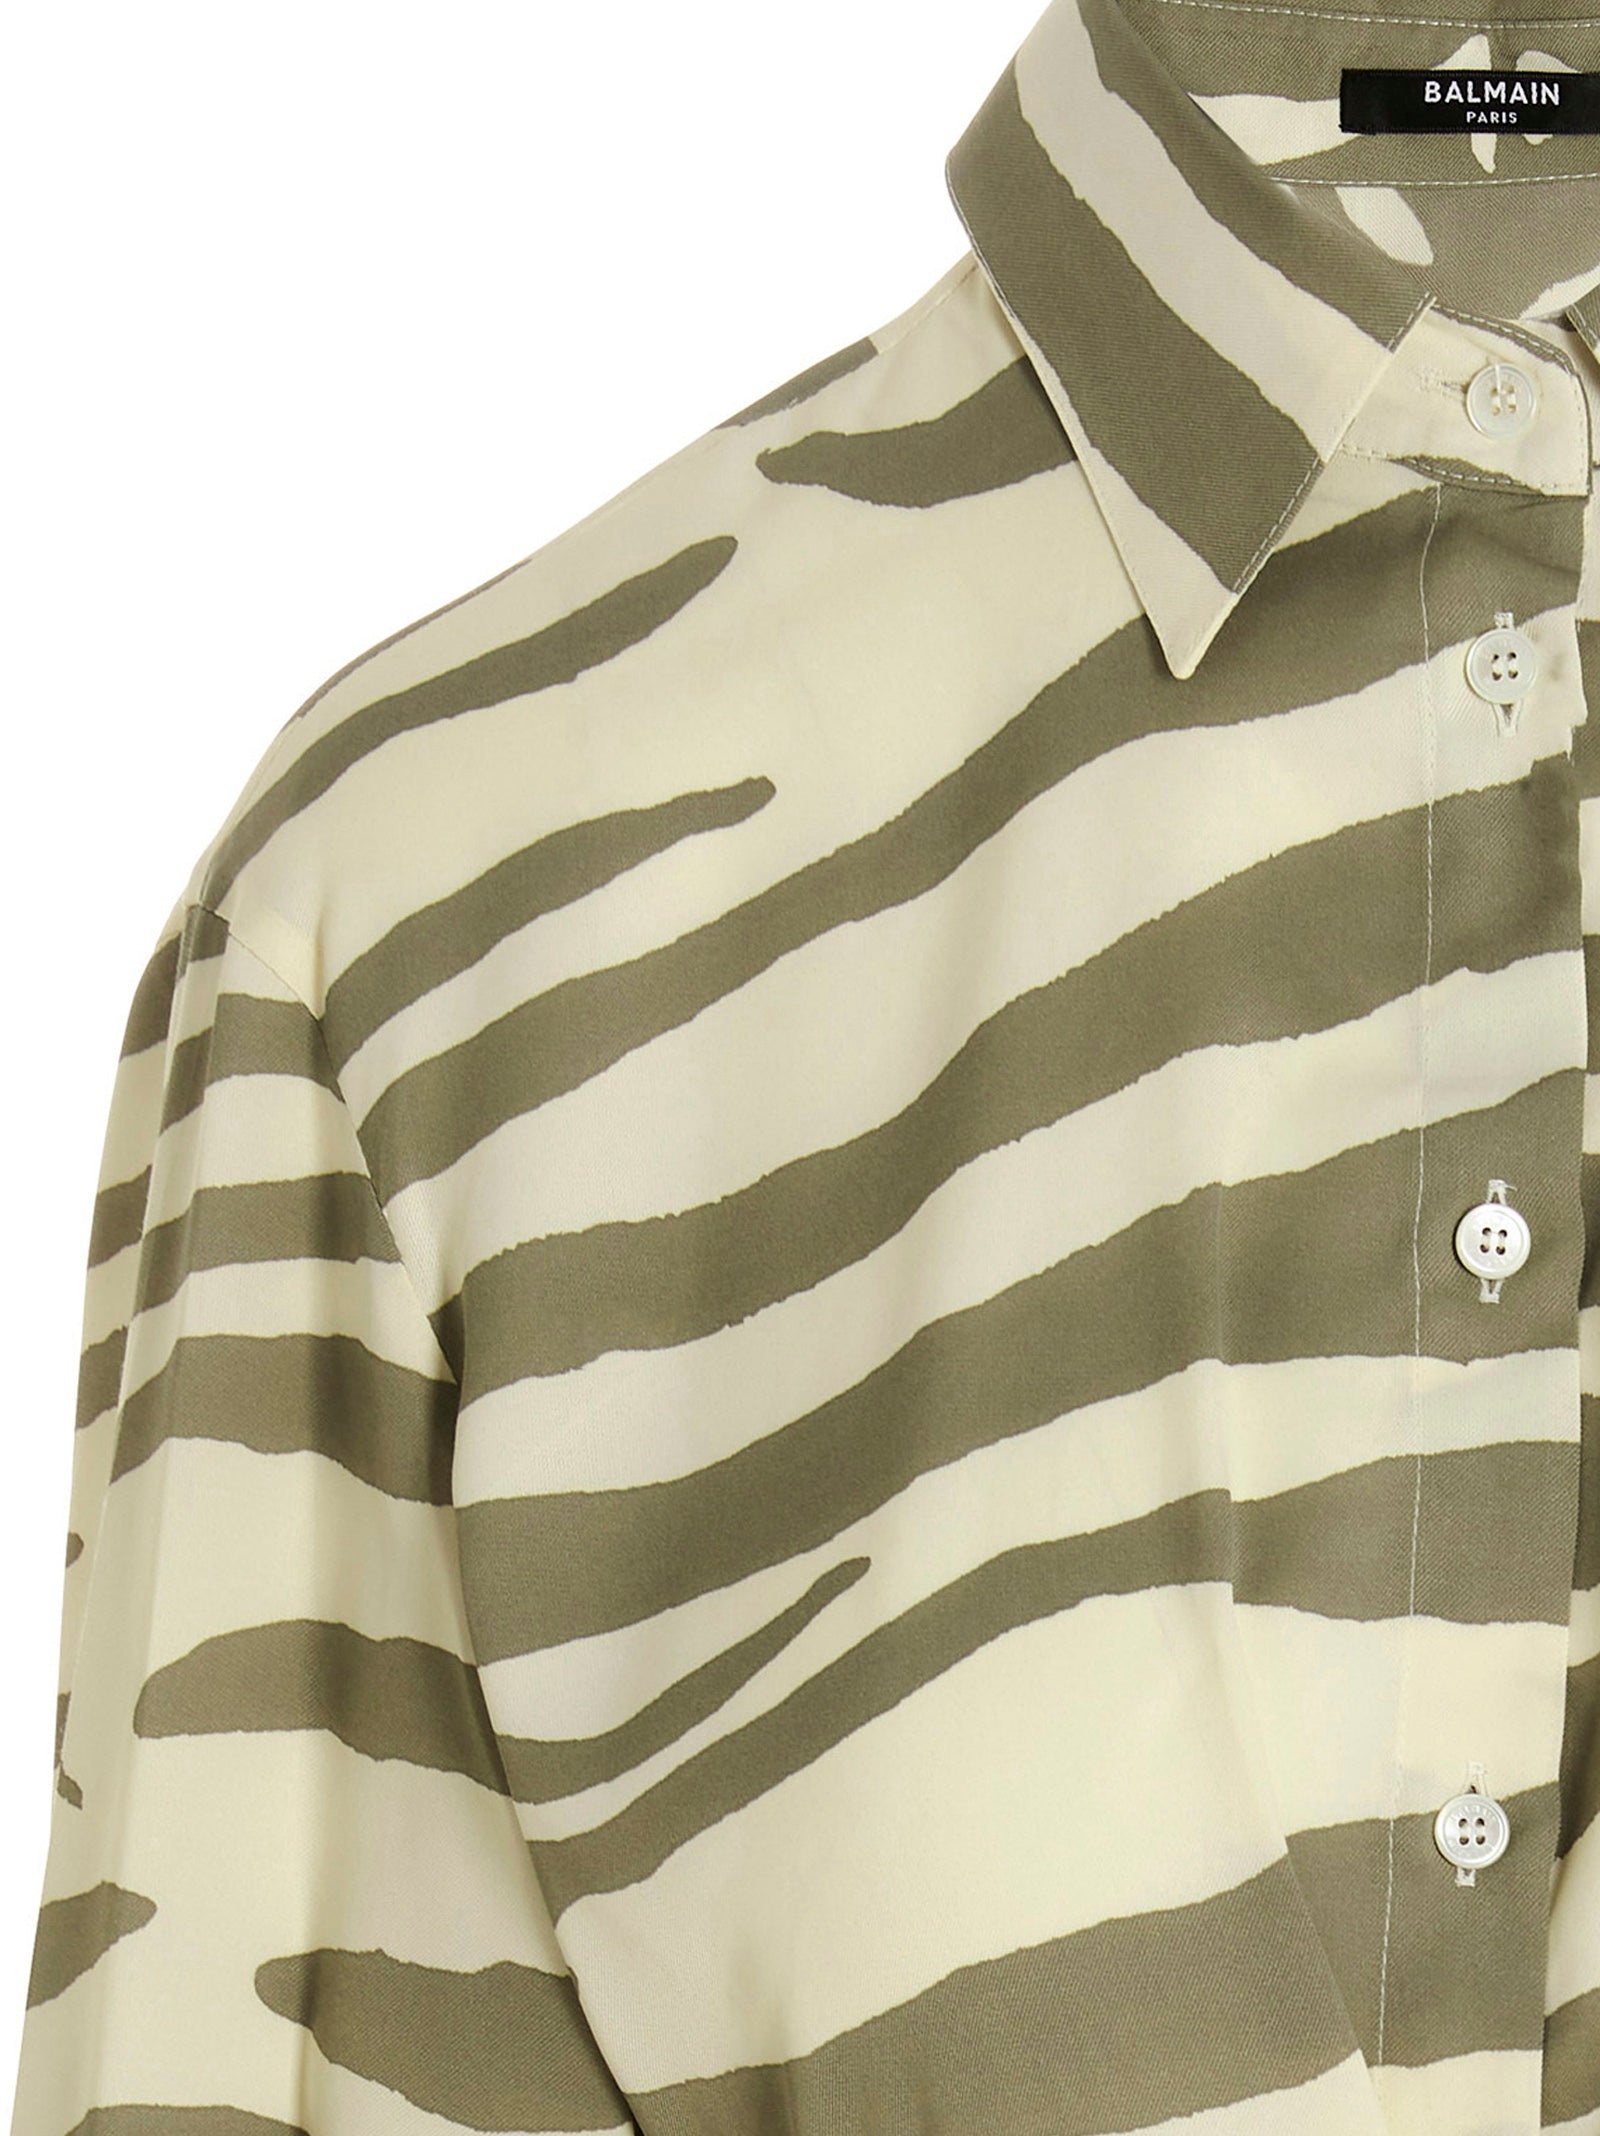 Balmain Zebra Shirt - 3